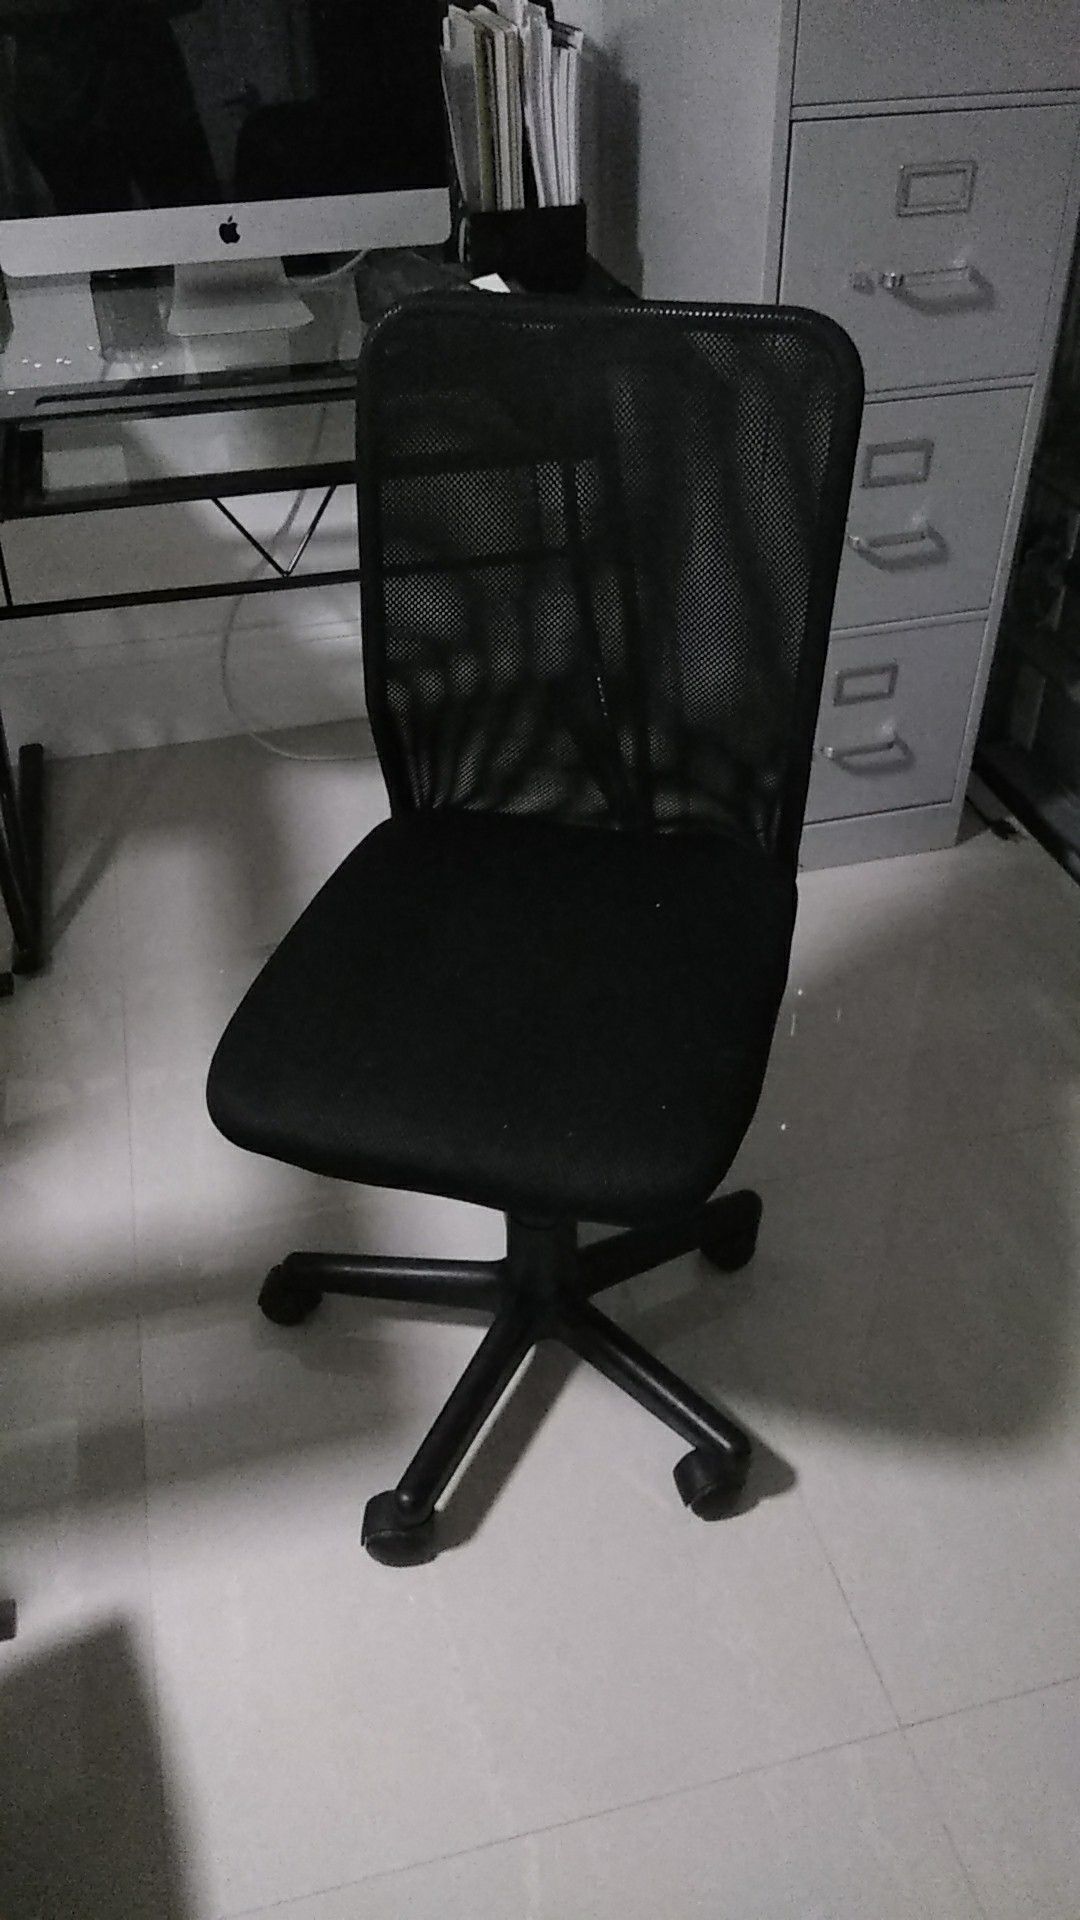 Office chair mesh